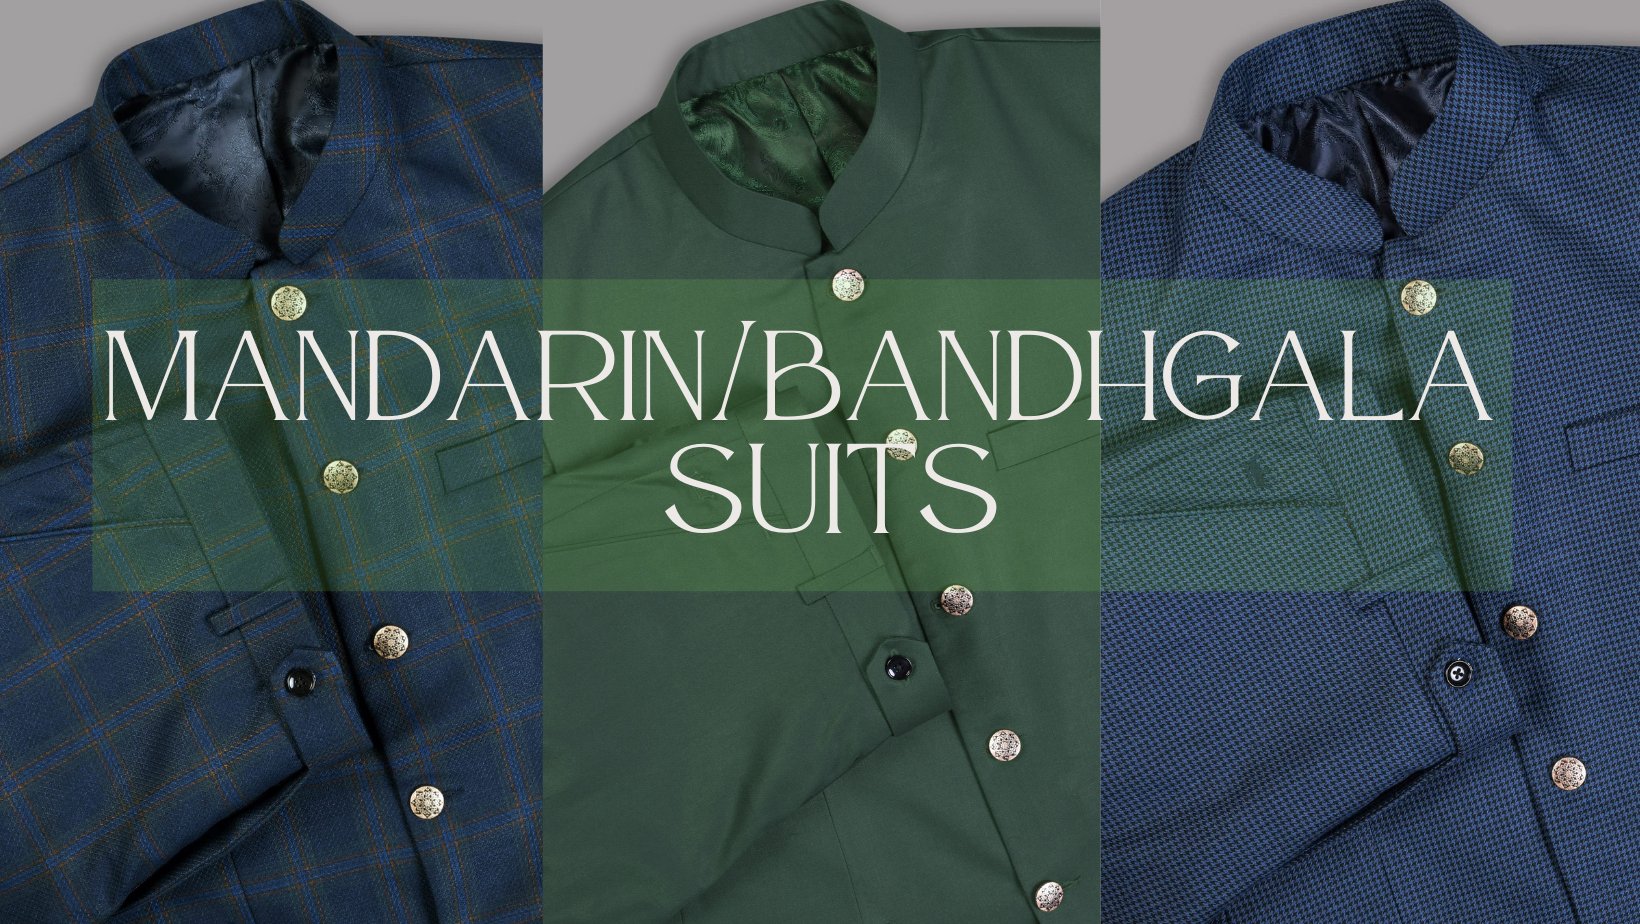 Mandarin/Bandhgala Suits